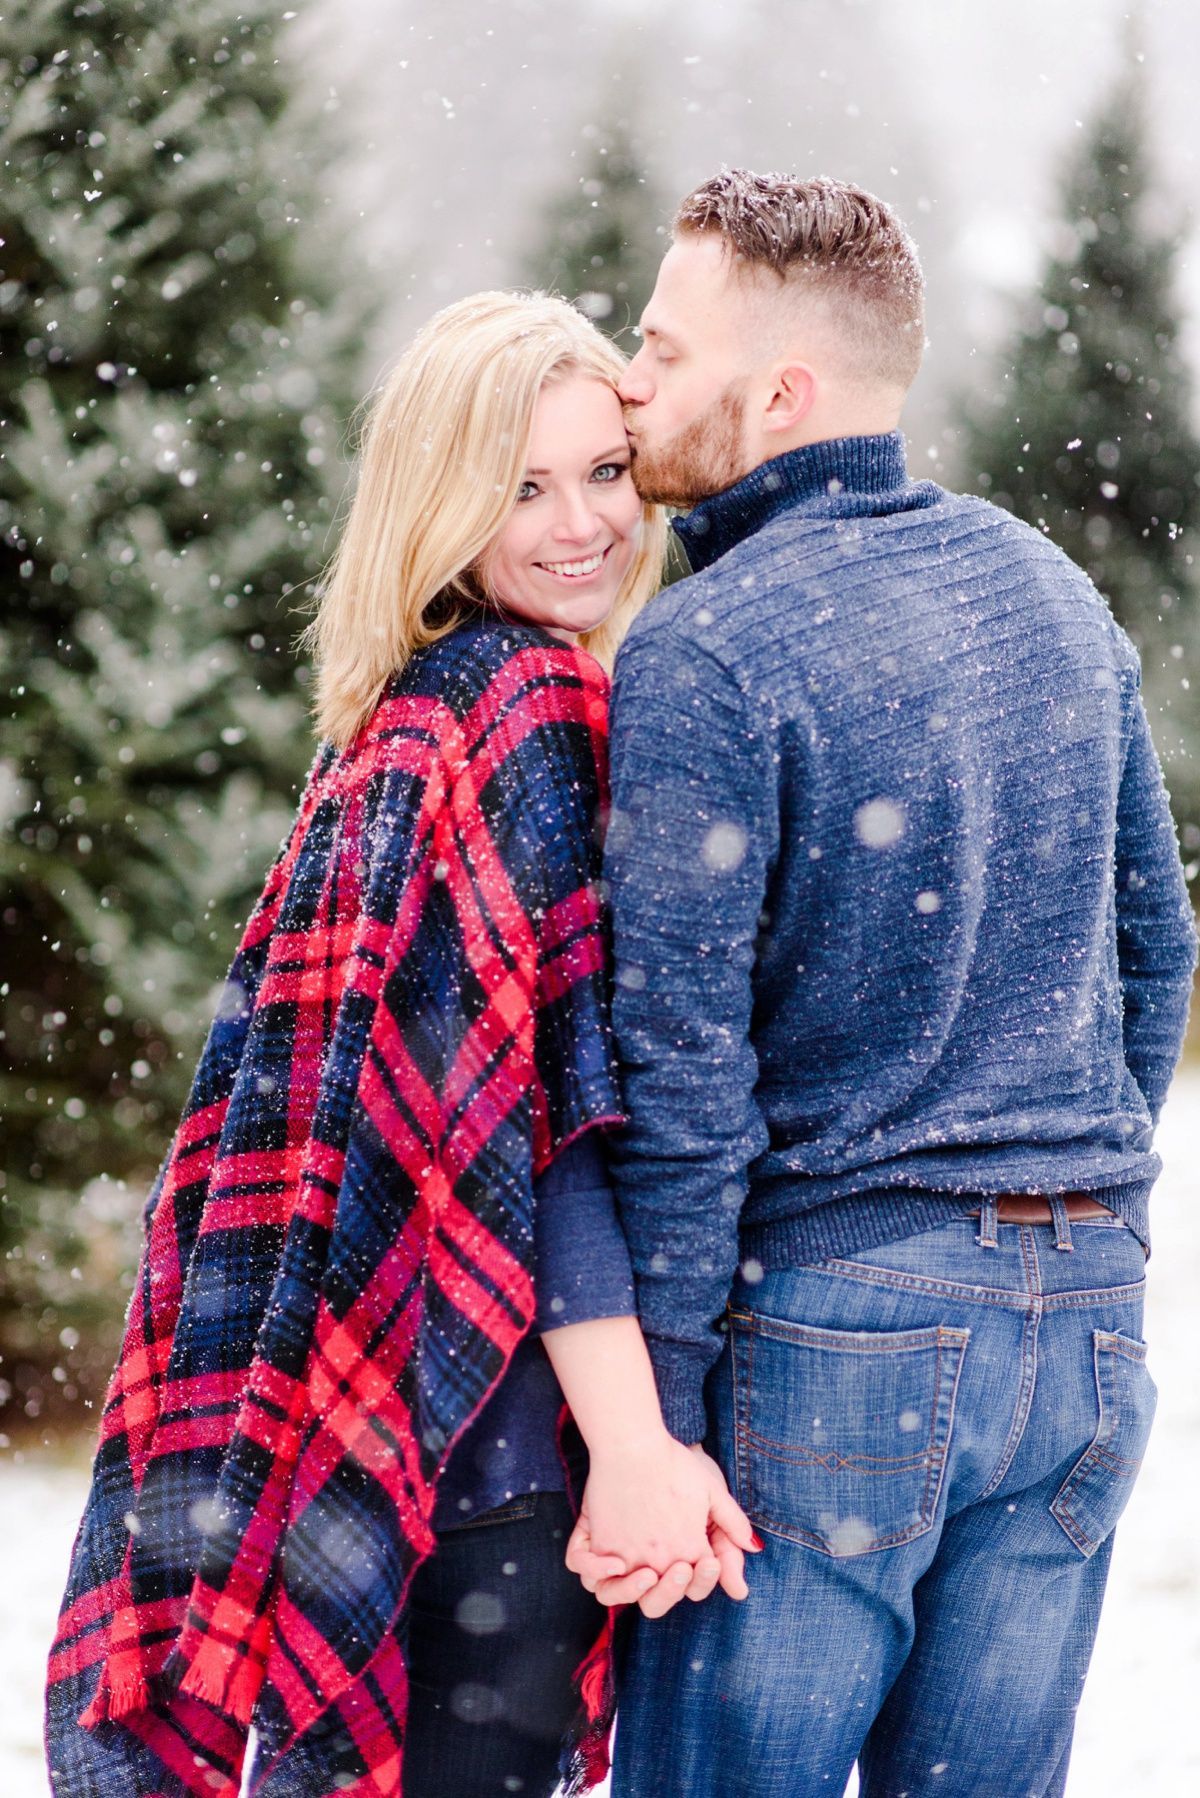 Snowy Christmas Tree Farm Engagement Session -   18 christmas photoshoot couples ideas